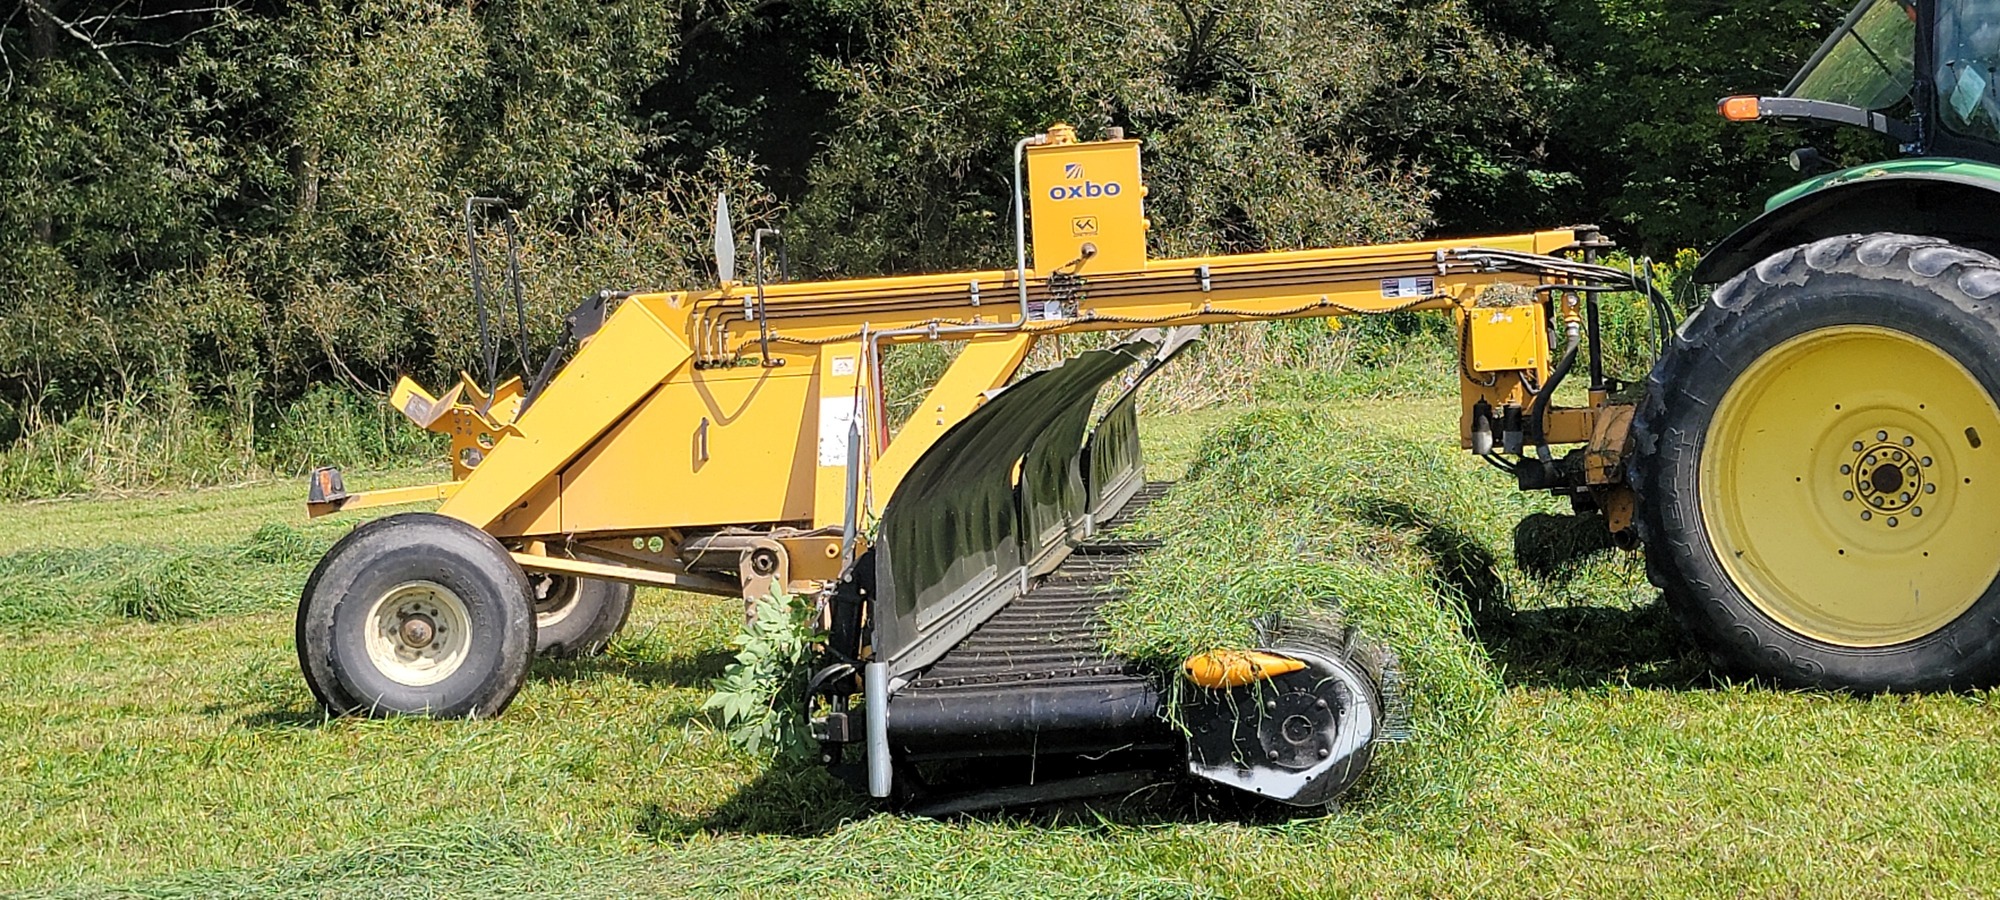 2011 OXBO 334 Harvesting Equipment | Iron Listing